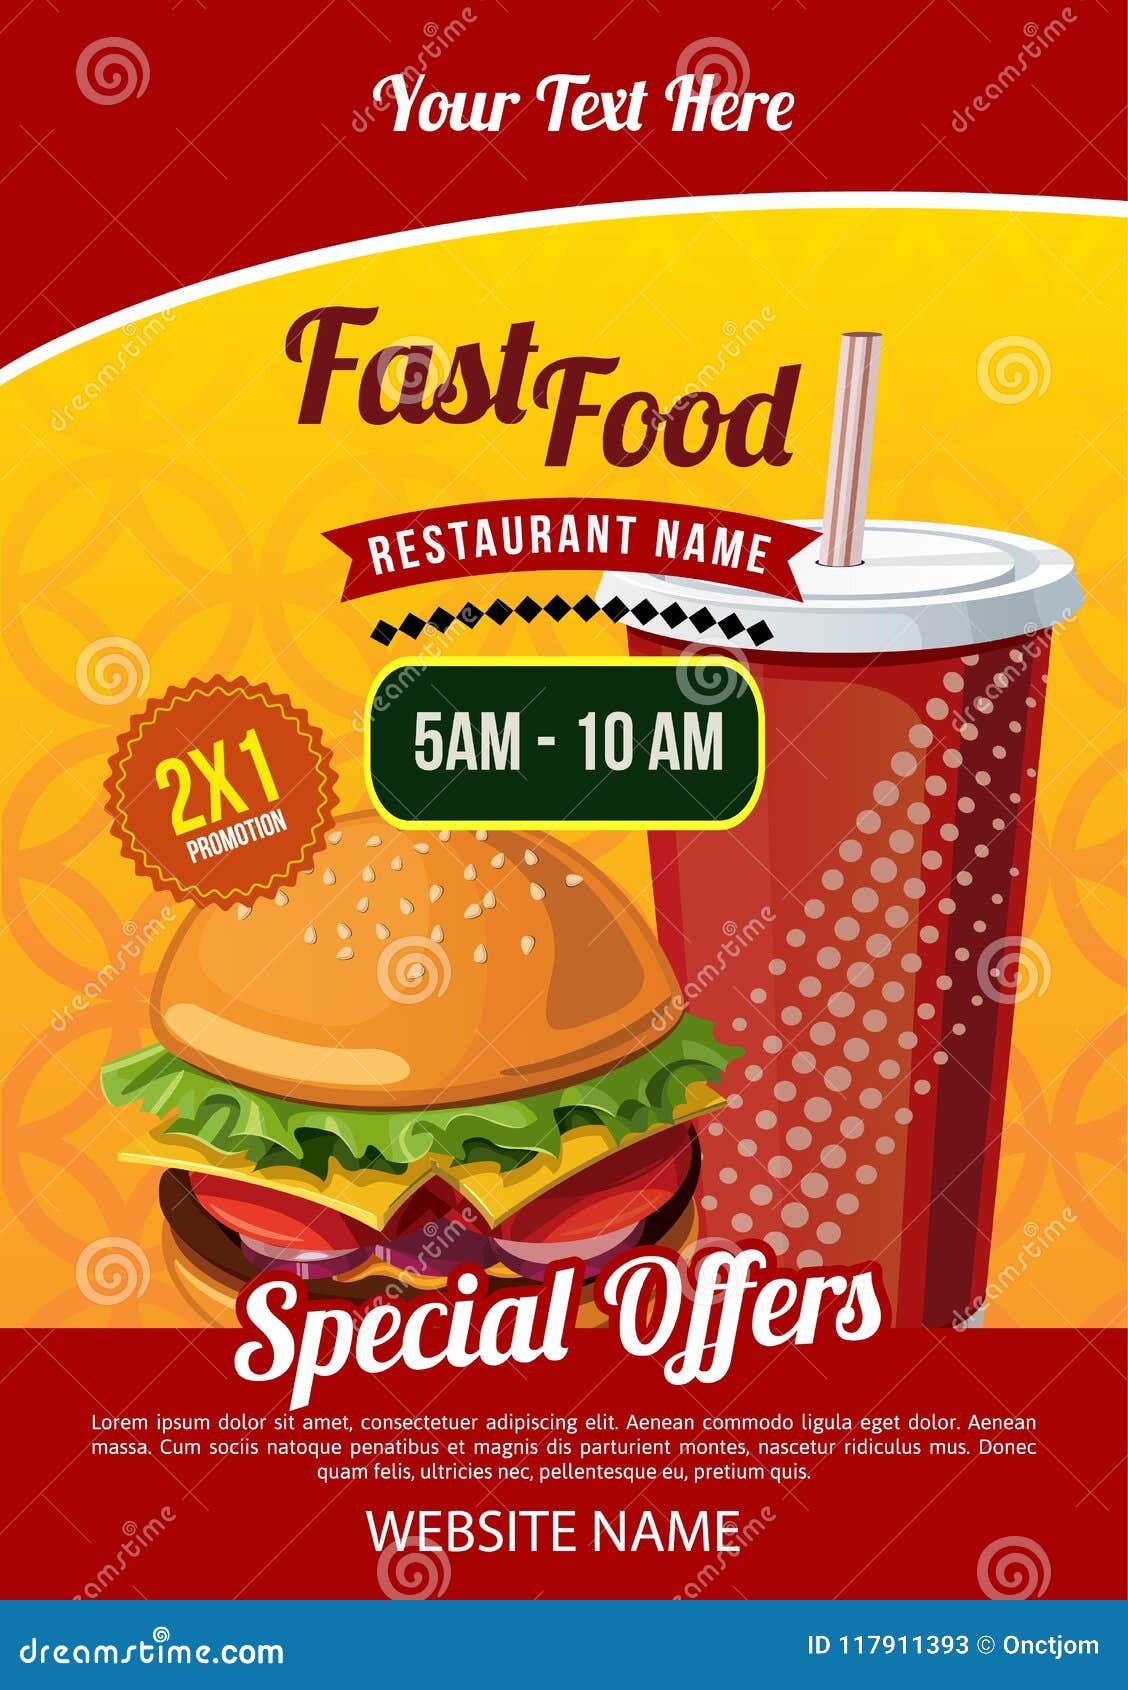 Takeaway Fast Food Restaurant Takeaway Menu Burger Leaflet Poster Chips Meal Box 